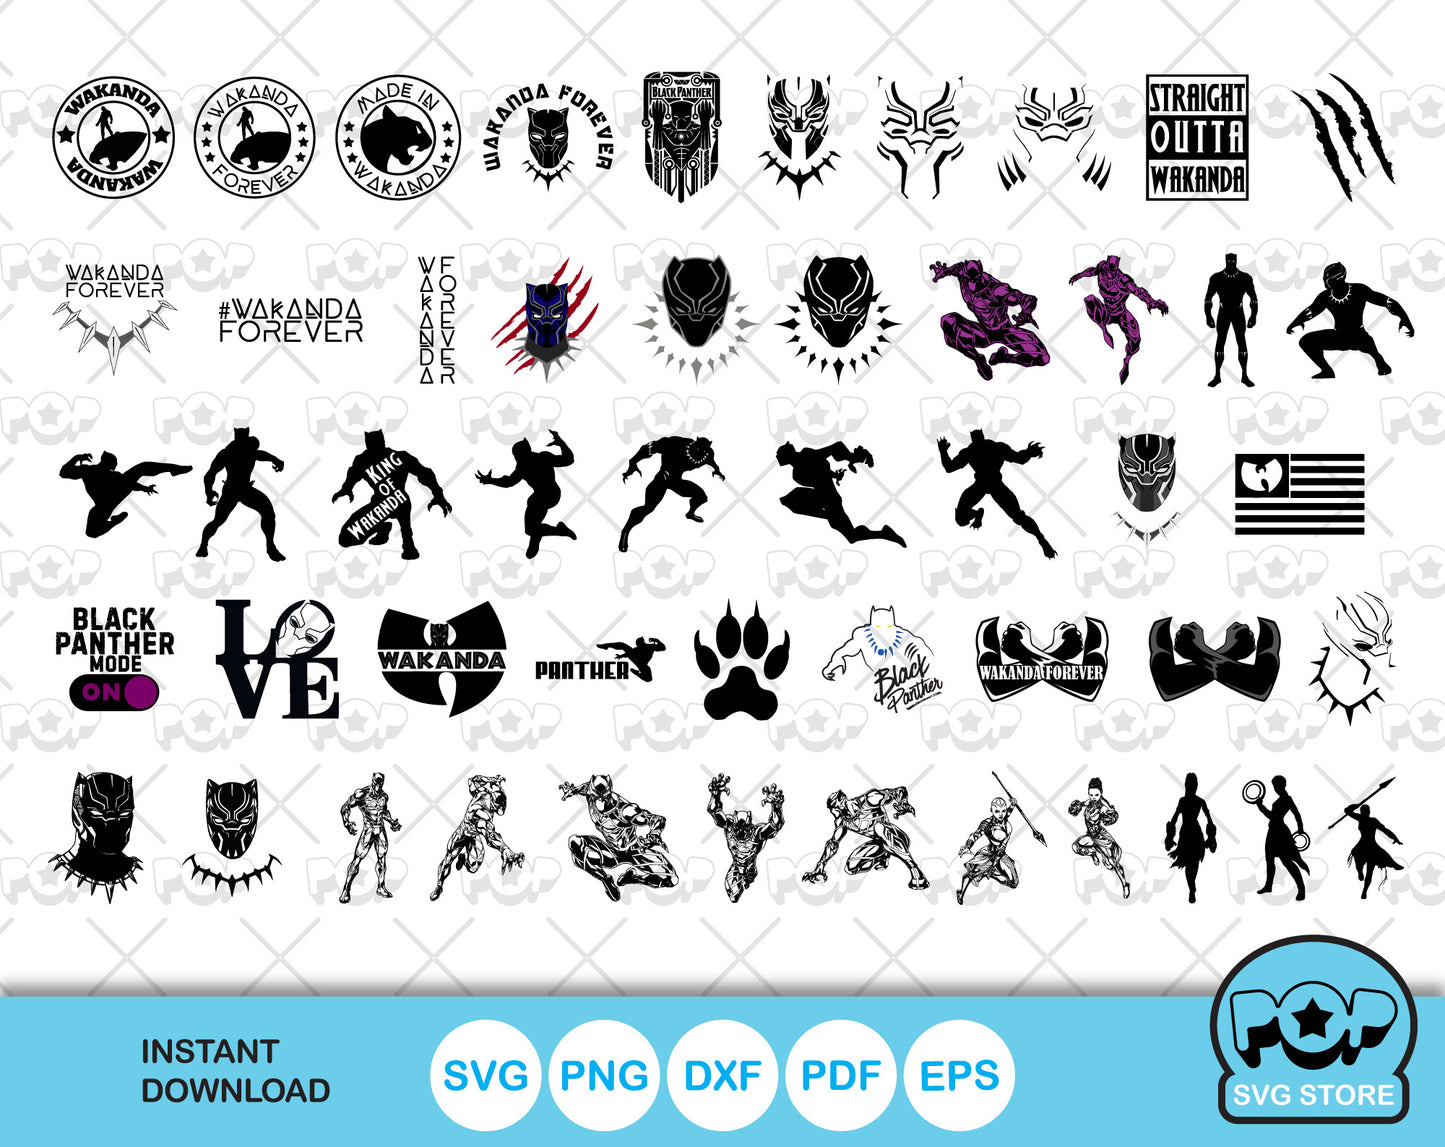 Black Panther 100 cliparts bundle, Black Panther SVG cut files for Cricut / Silhouette, PNG, DXF, instant download